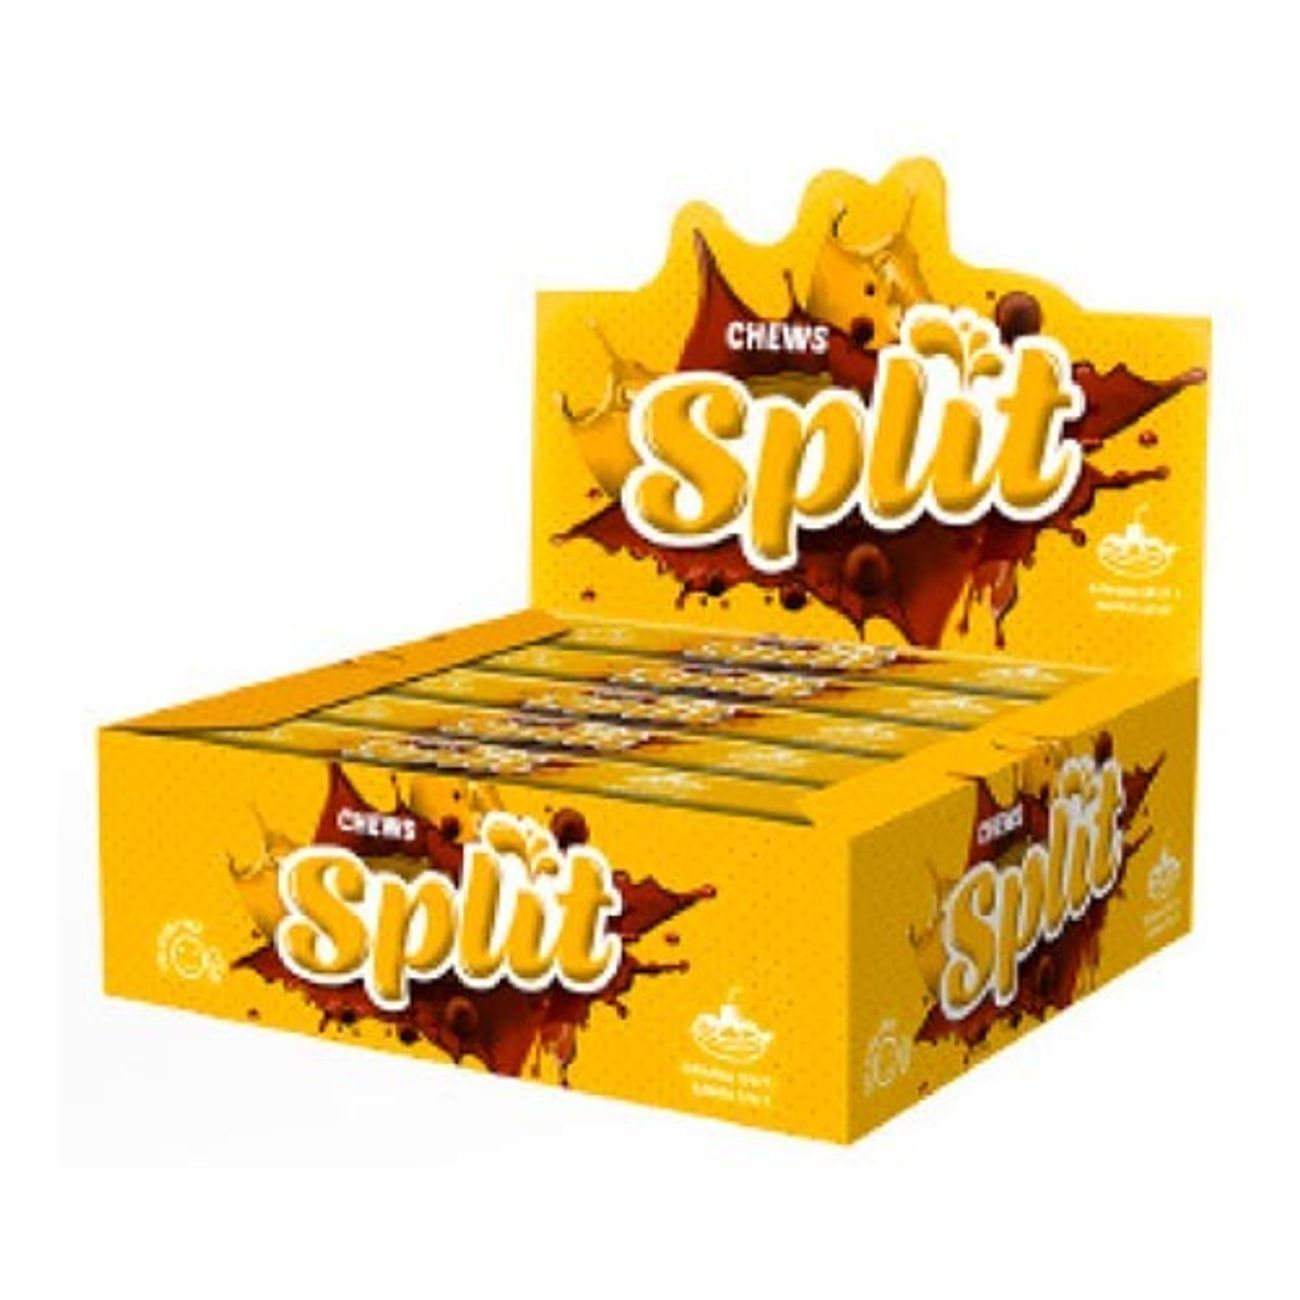 chews-split-banansplit-1